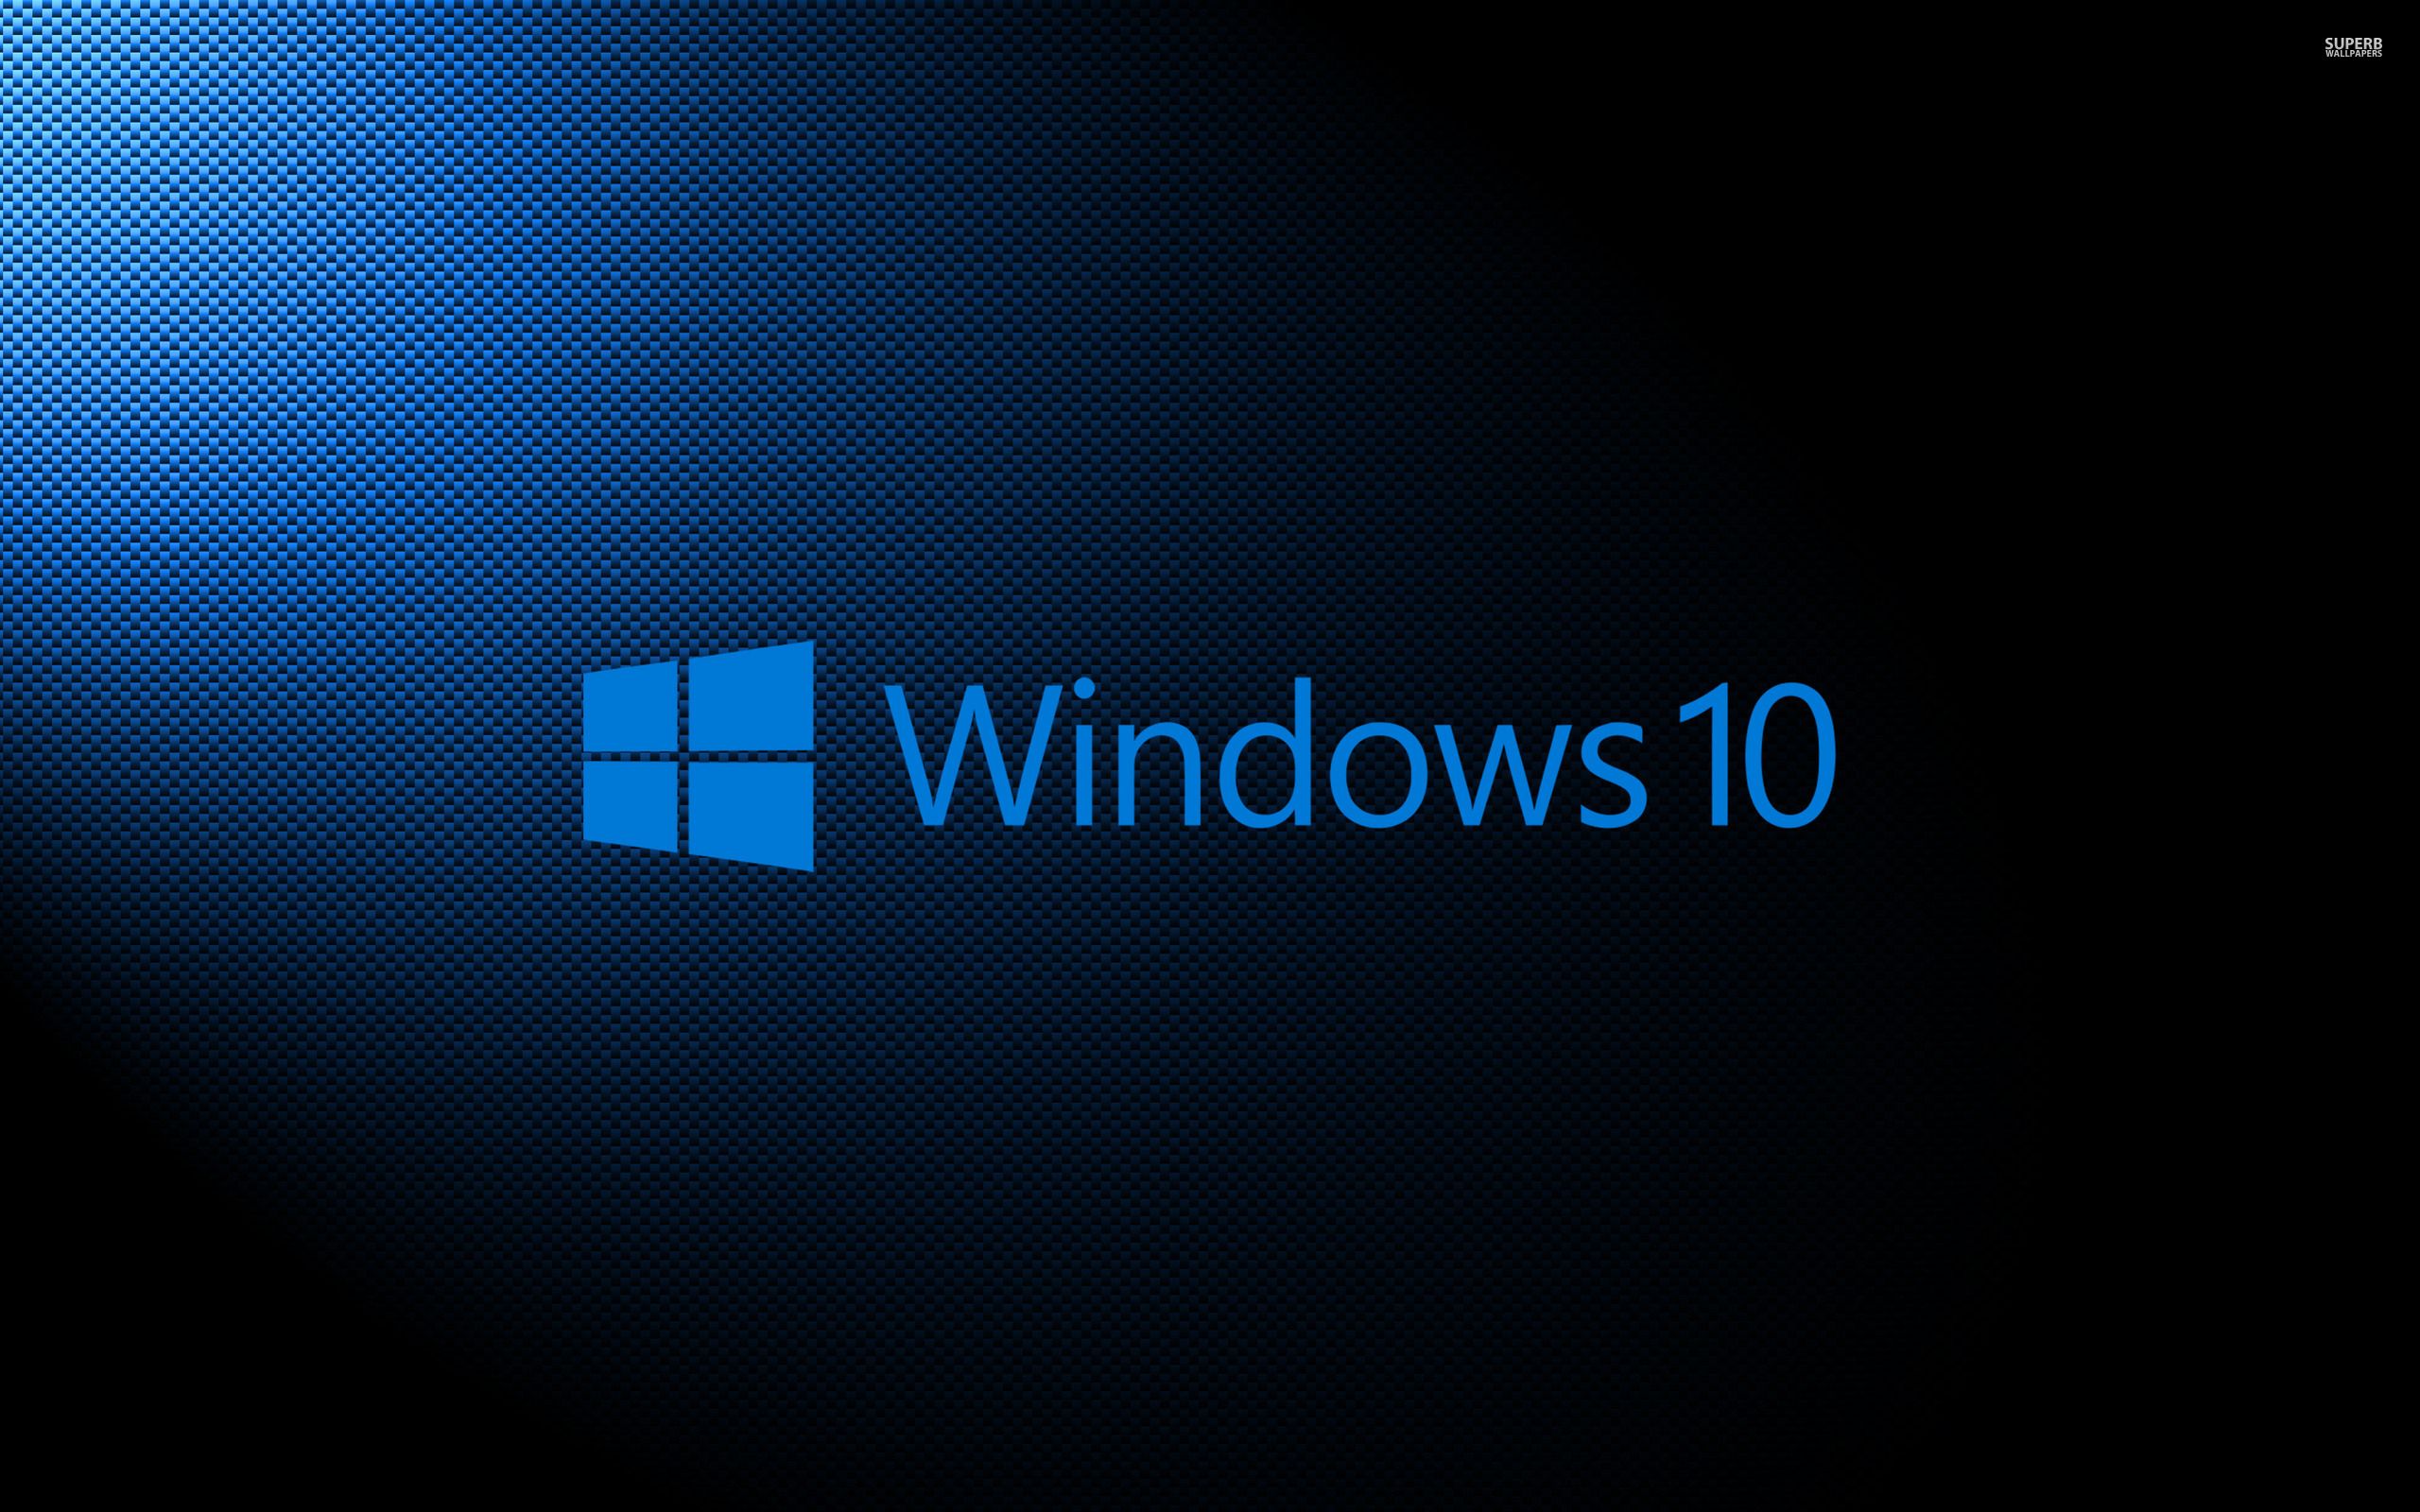 Windows 10 light blue text logo on carbon fiber wallpaper ...